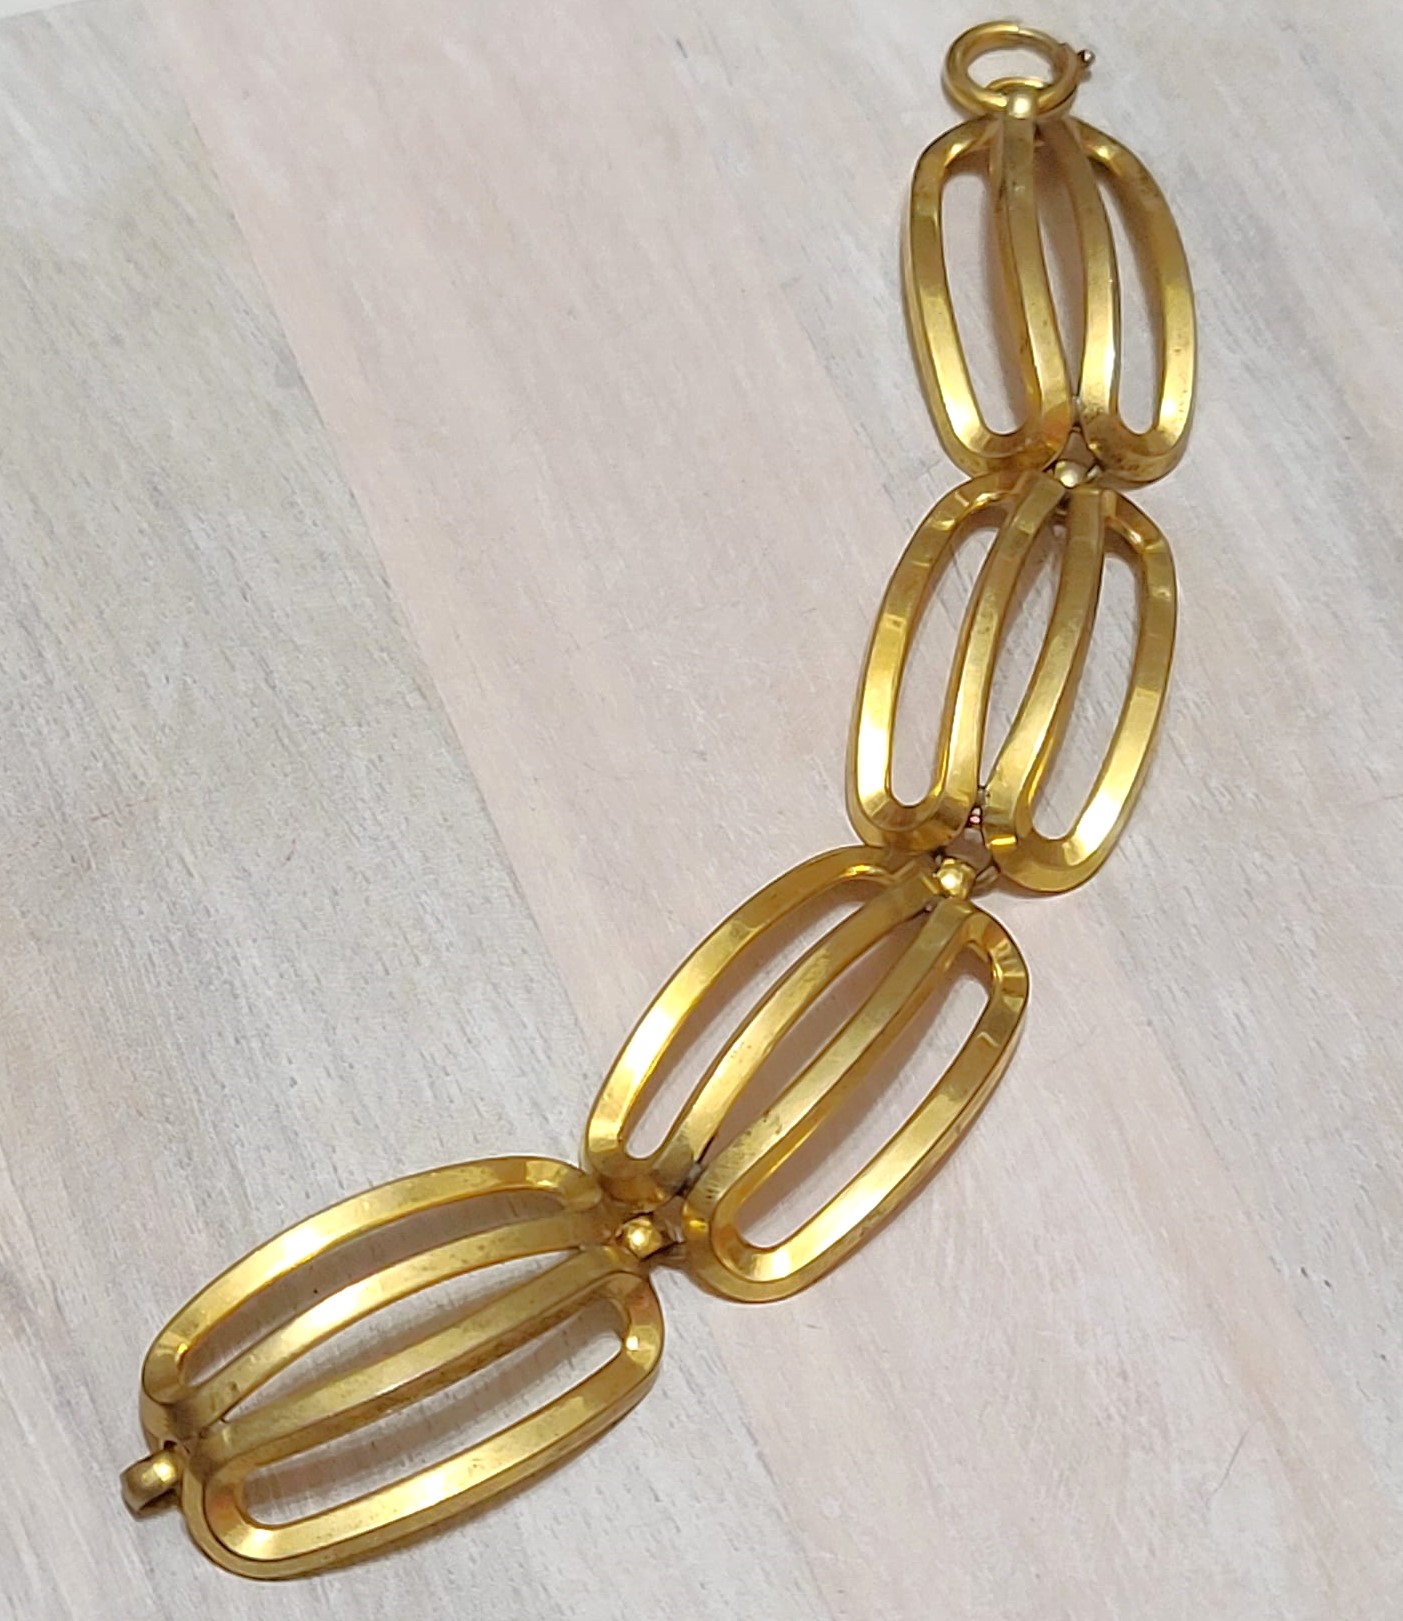 Vintage bracelet, in brass finish, large bubble caged links